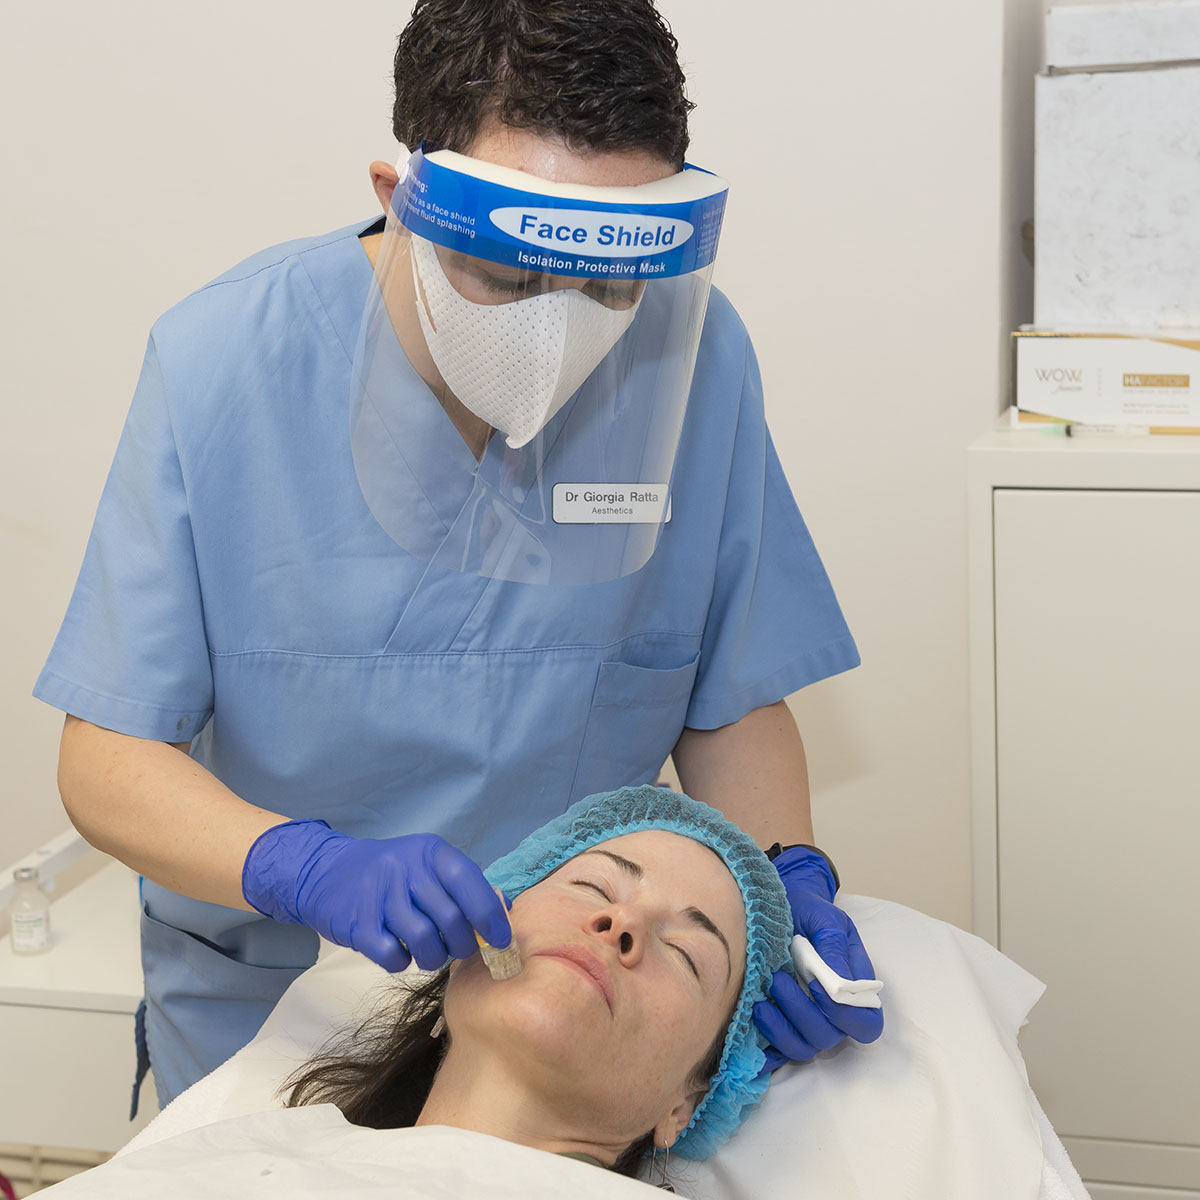 Dr Giorgia Ratta performing a WOW Fusion medical grade facial treatment